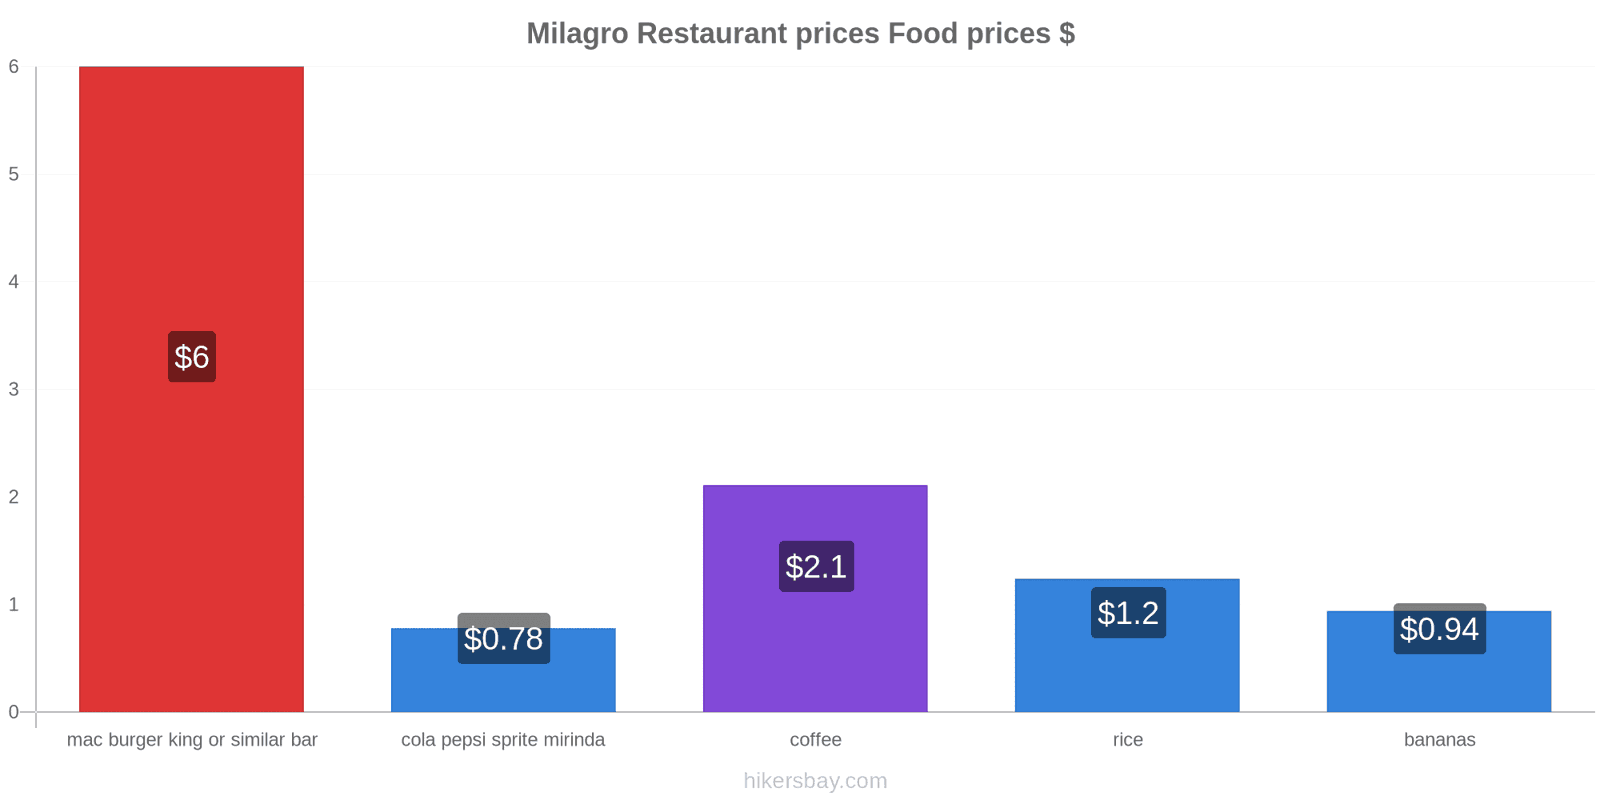 Milagro price changes hikersbay.com